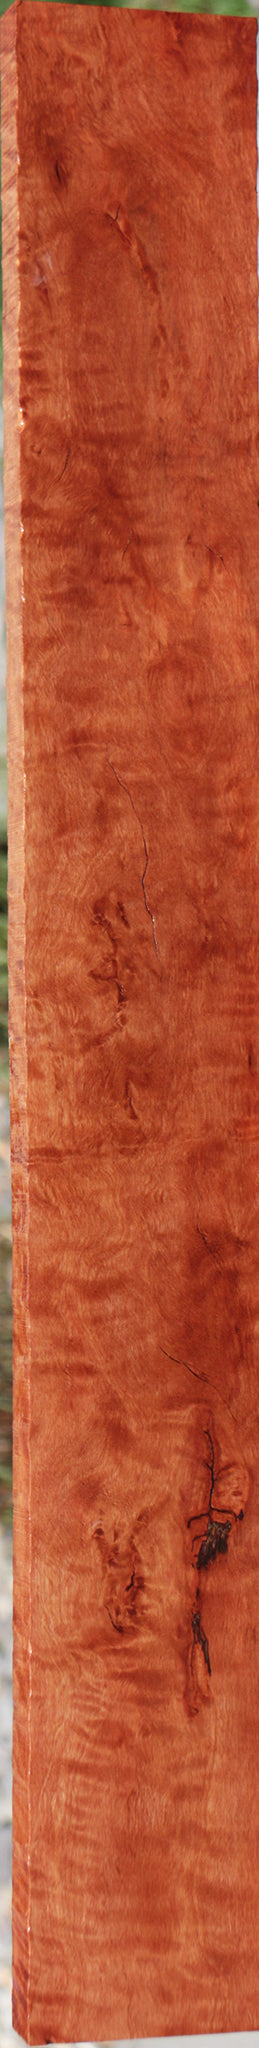 Extra Fancy Rustic Rambutan Lumber